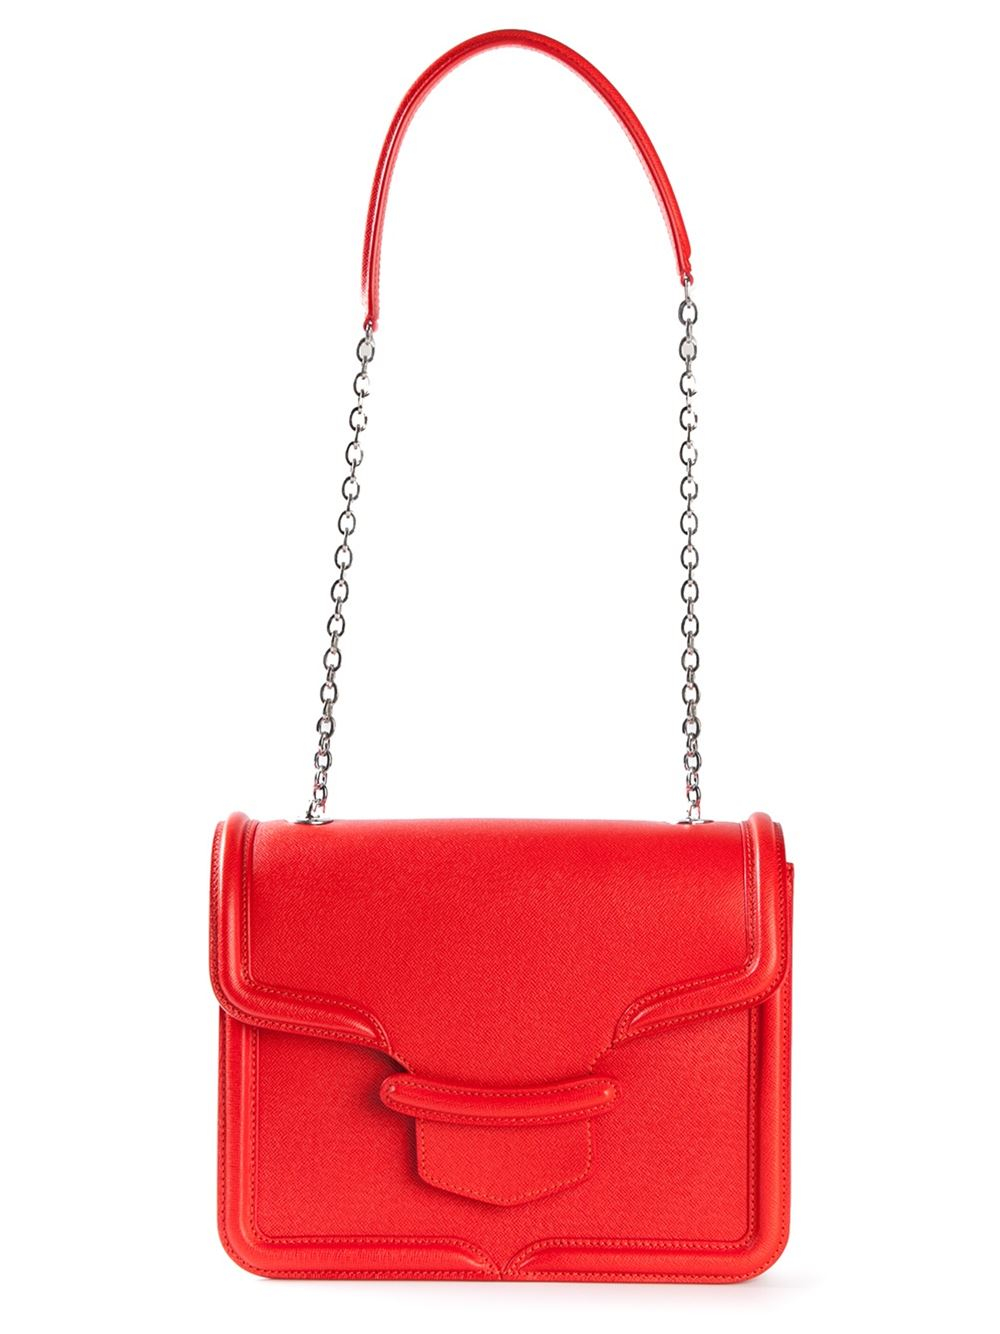 Alexander mcqueen Heroine Large Calf-Leather Shoulder Bag in Red | Lyst